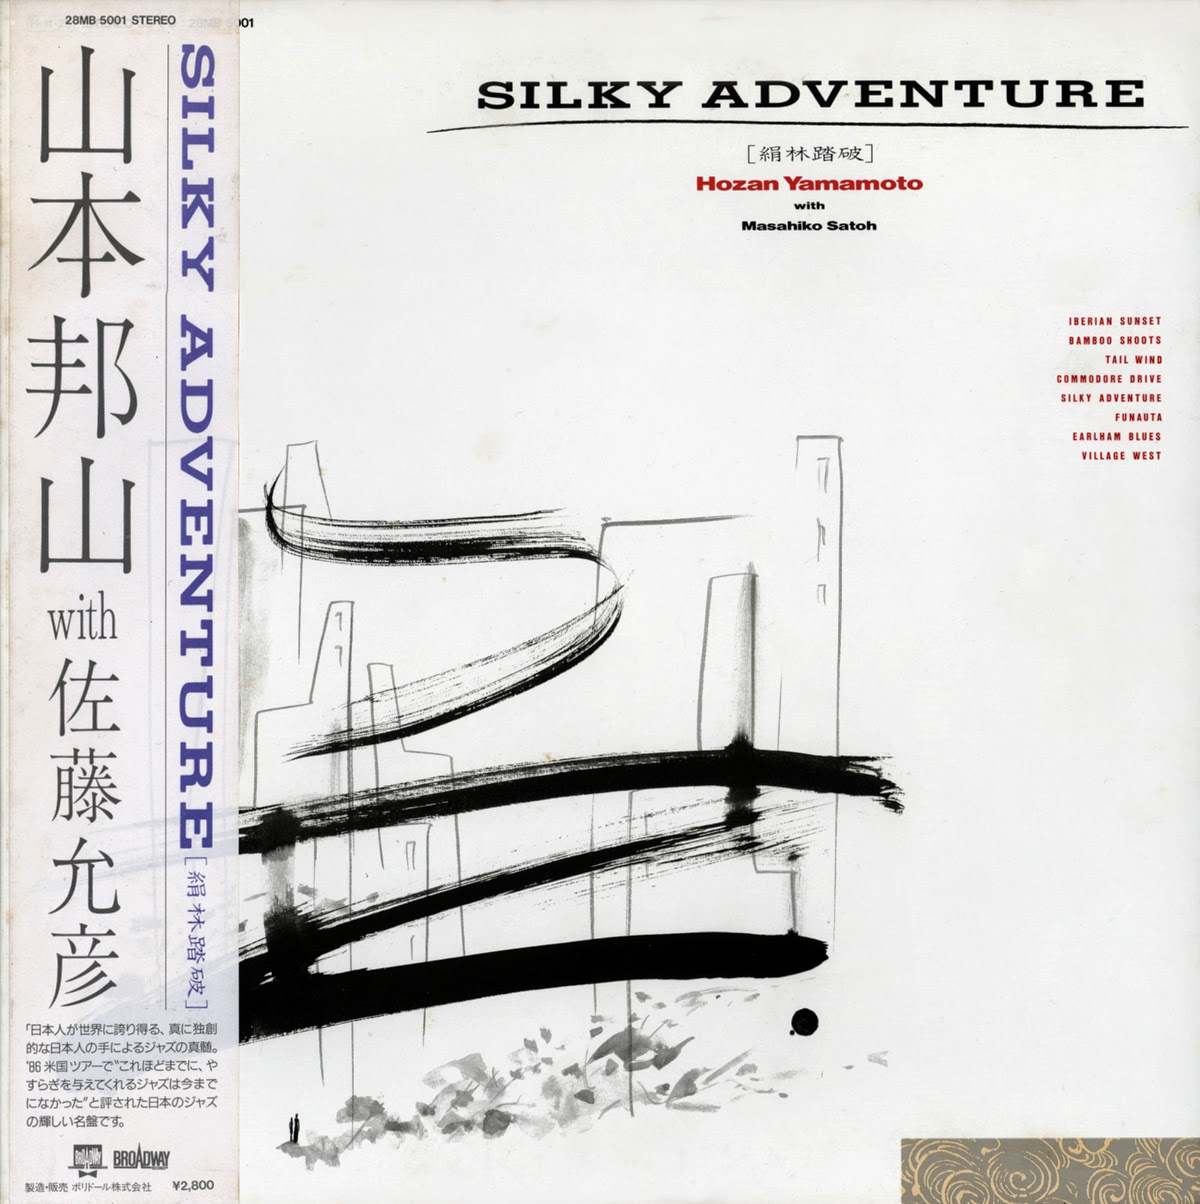 HOZAN YAMAMOTO - Silky Adventure cover 